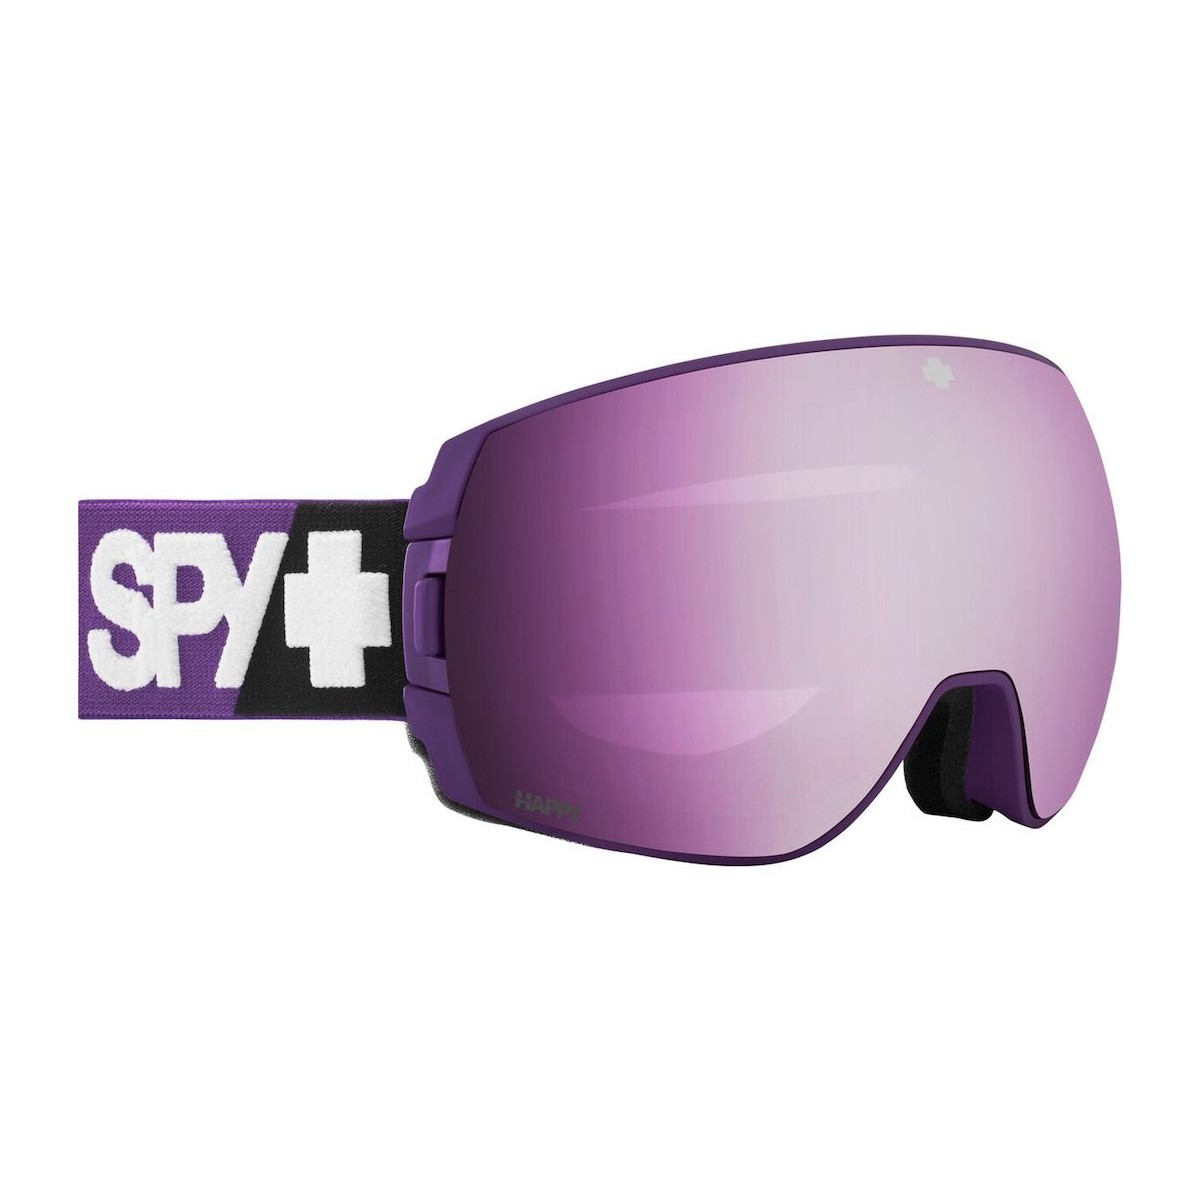 SPY LEGACY SE SNOW goggles - purple